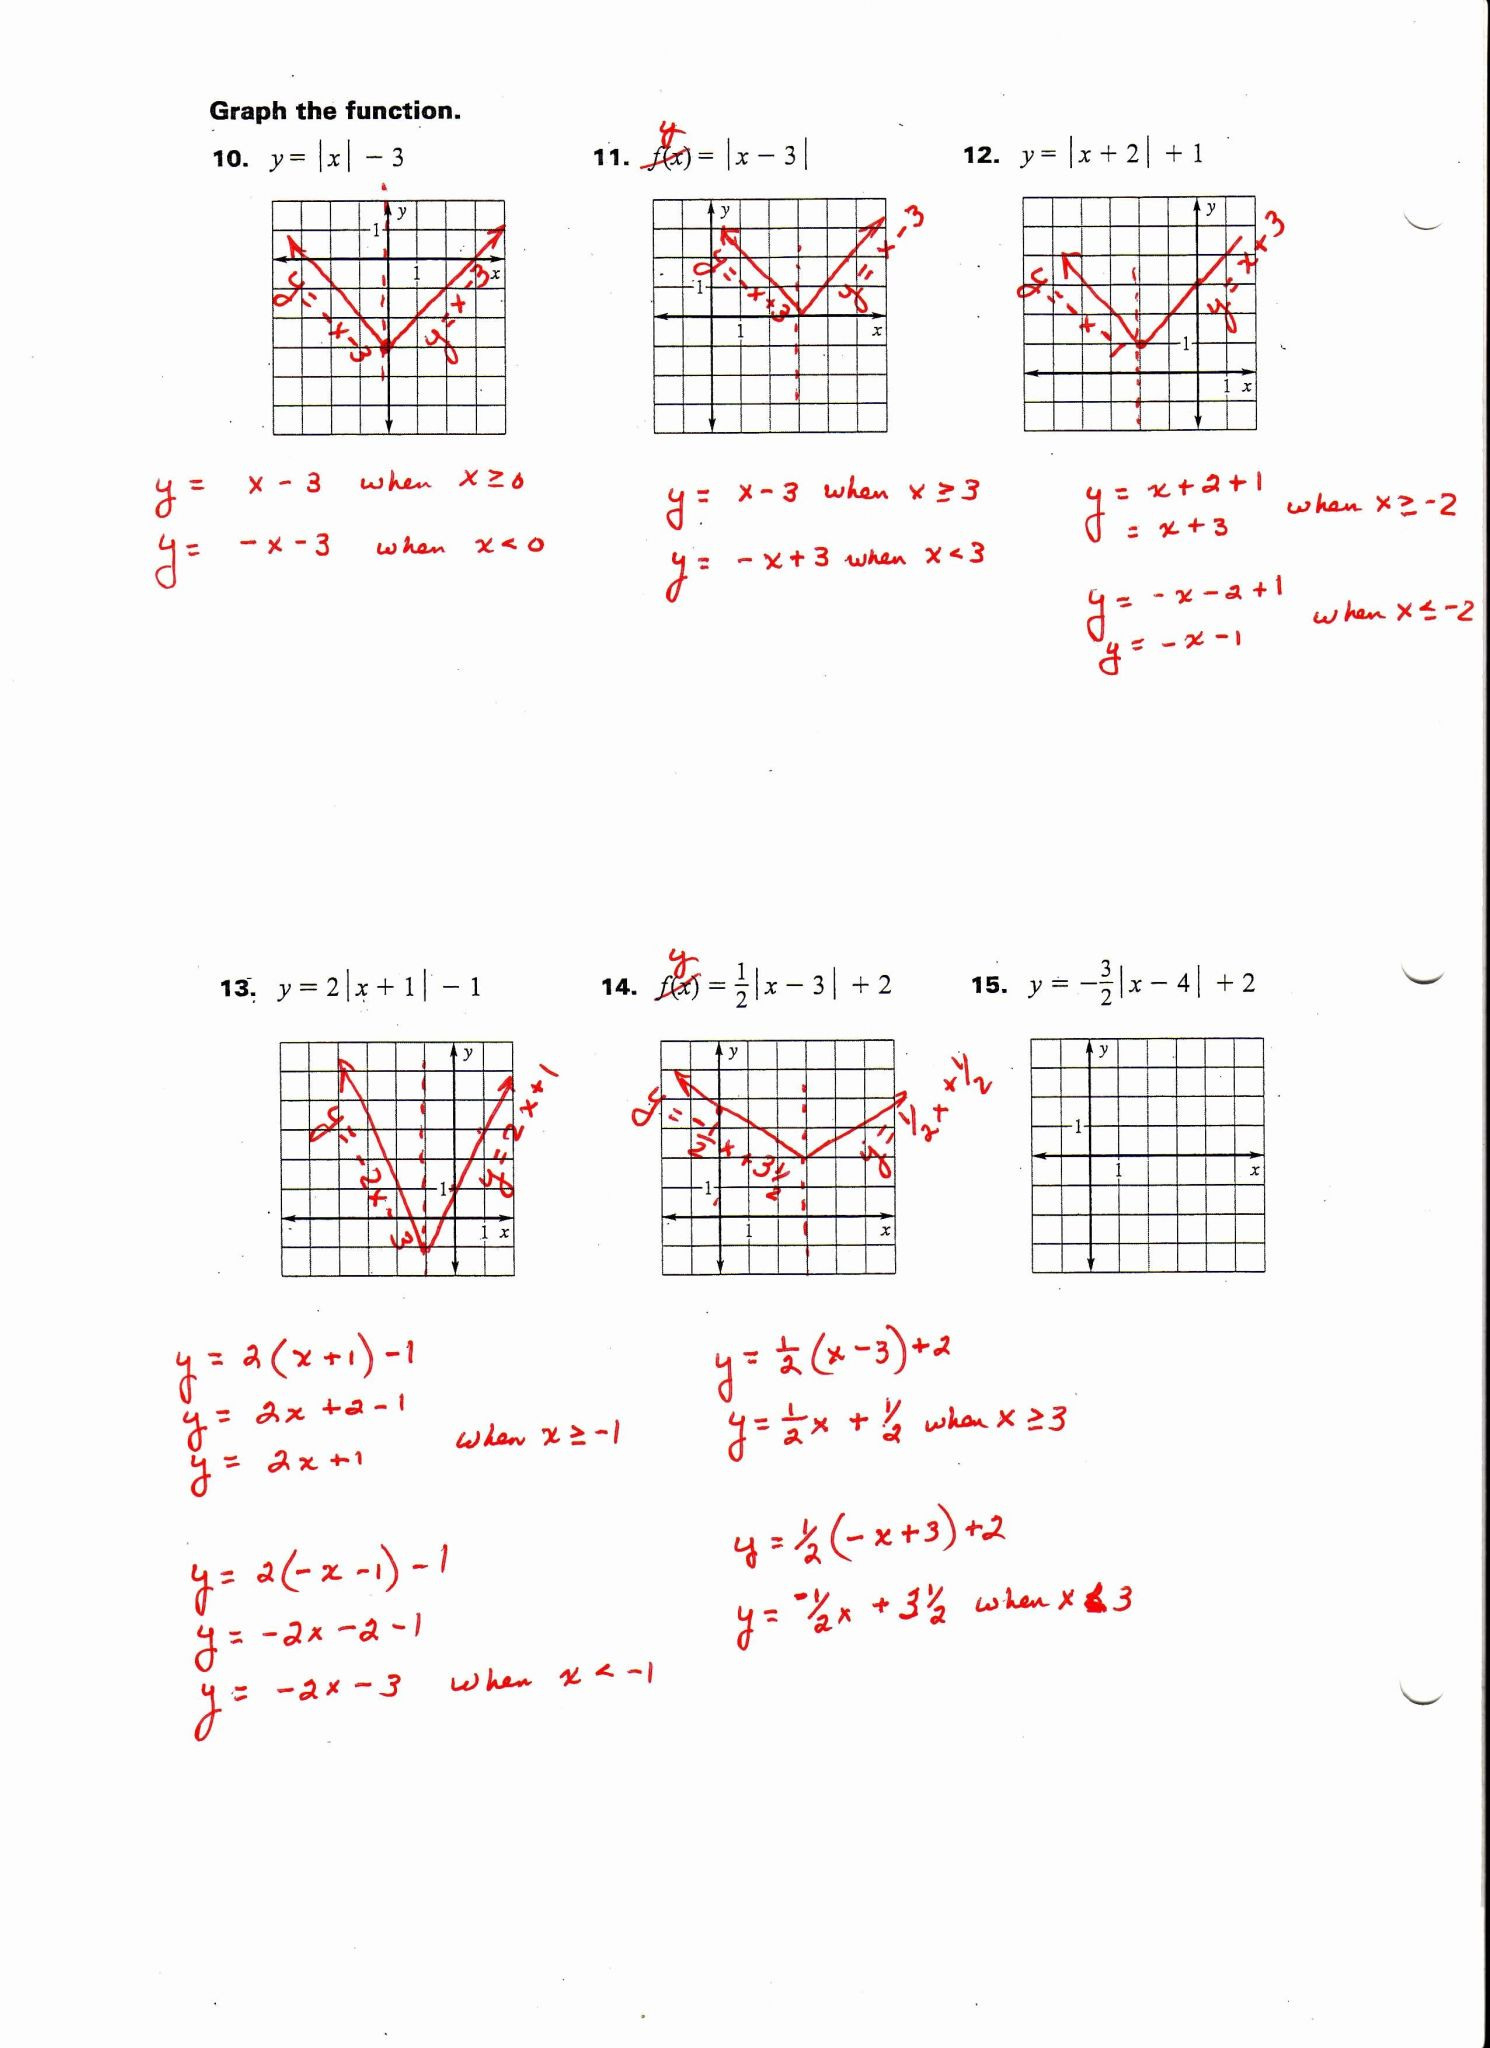 graphing-polynomials-worksheet-algebra-2-db-excel